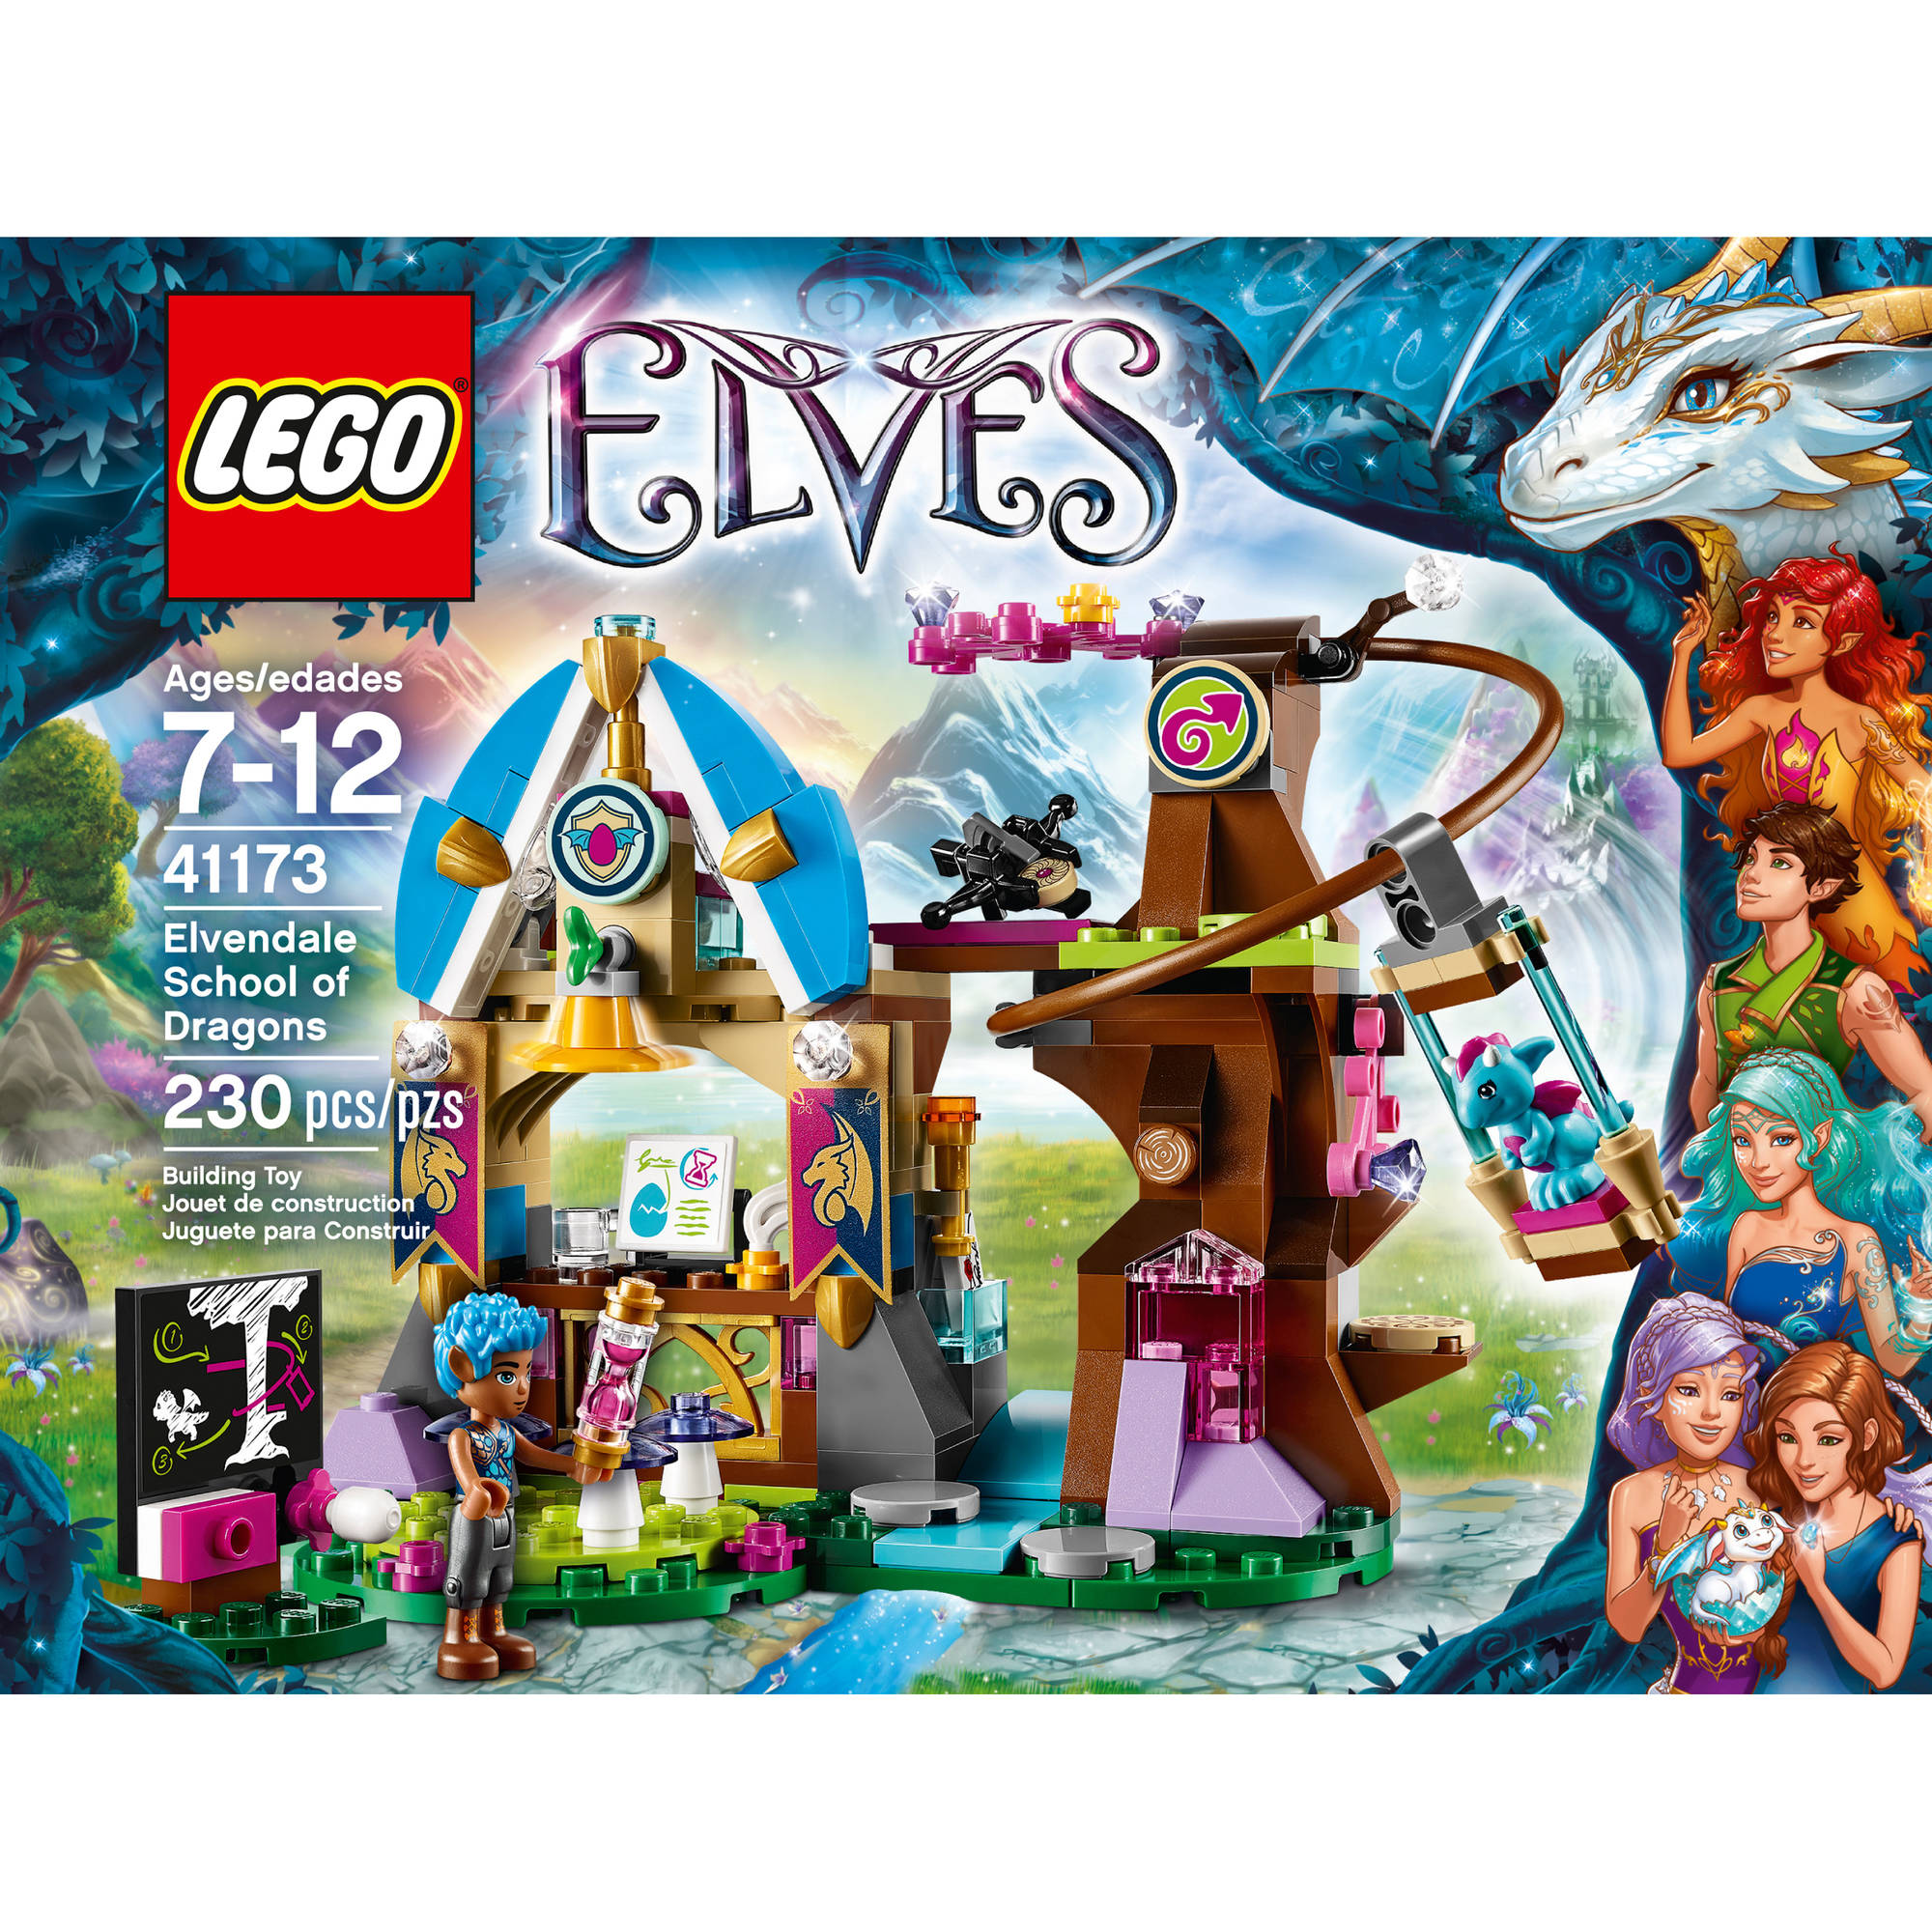 LEGO Elves Elvendale School of Dragons, 41173 - image 2 of 6